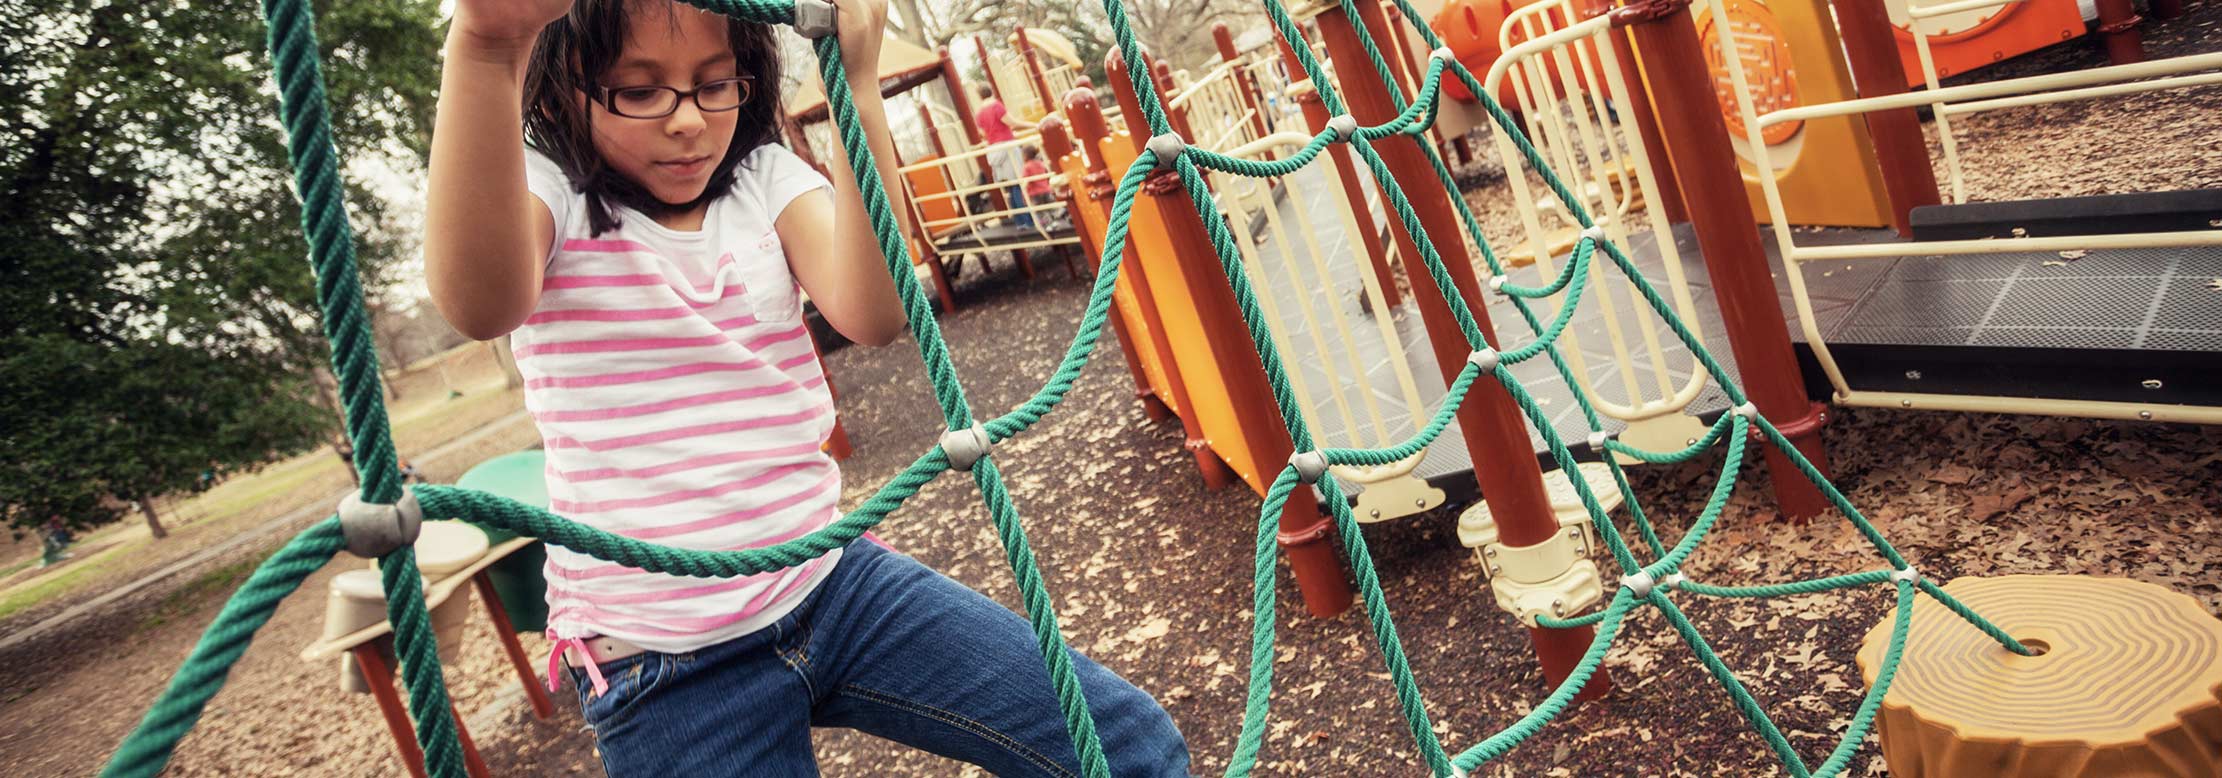 Child plays in park playground.